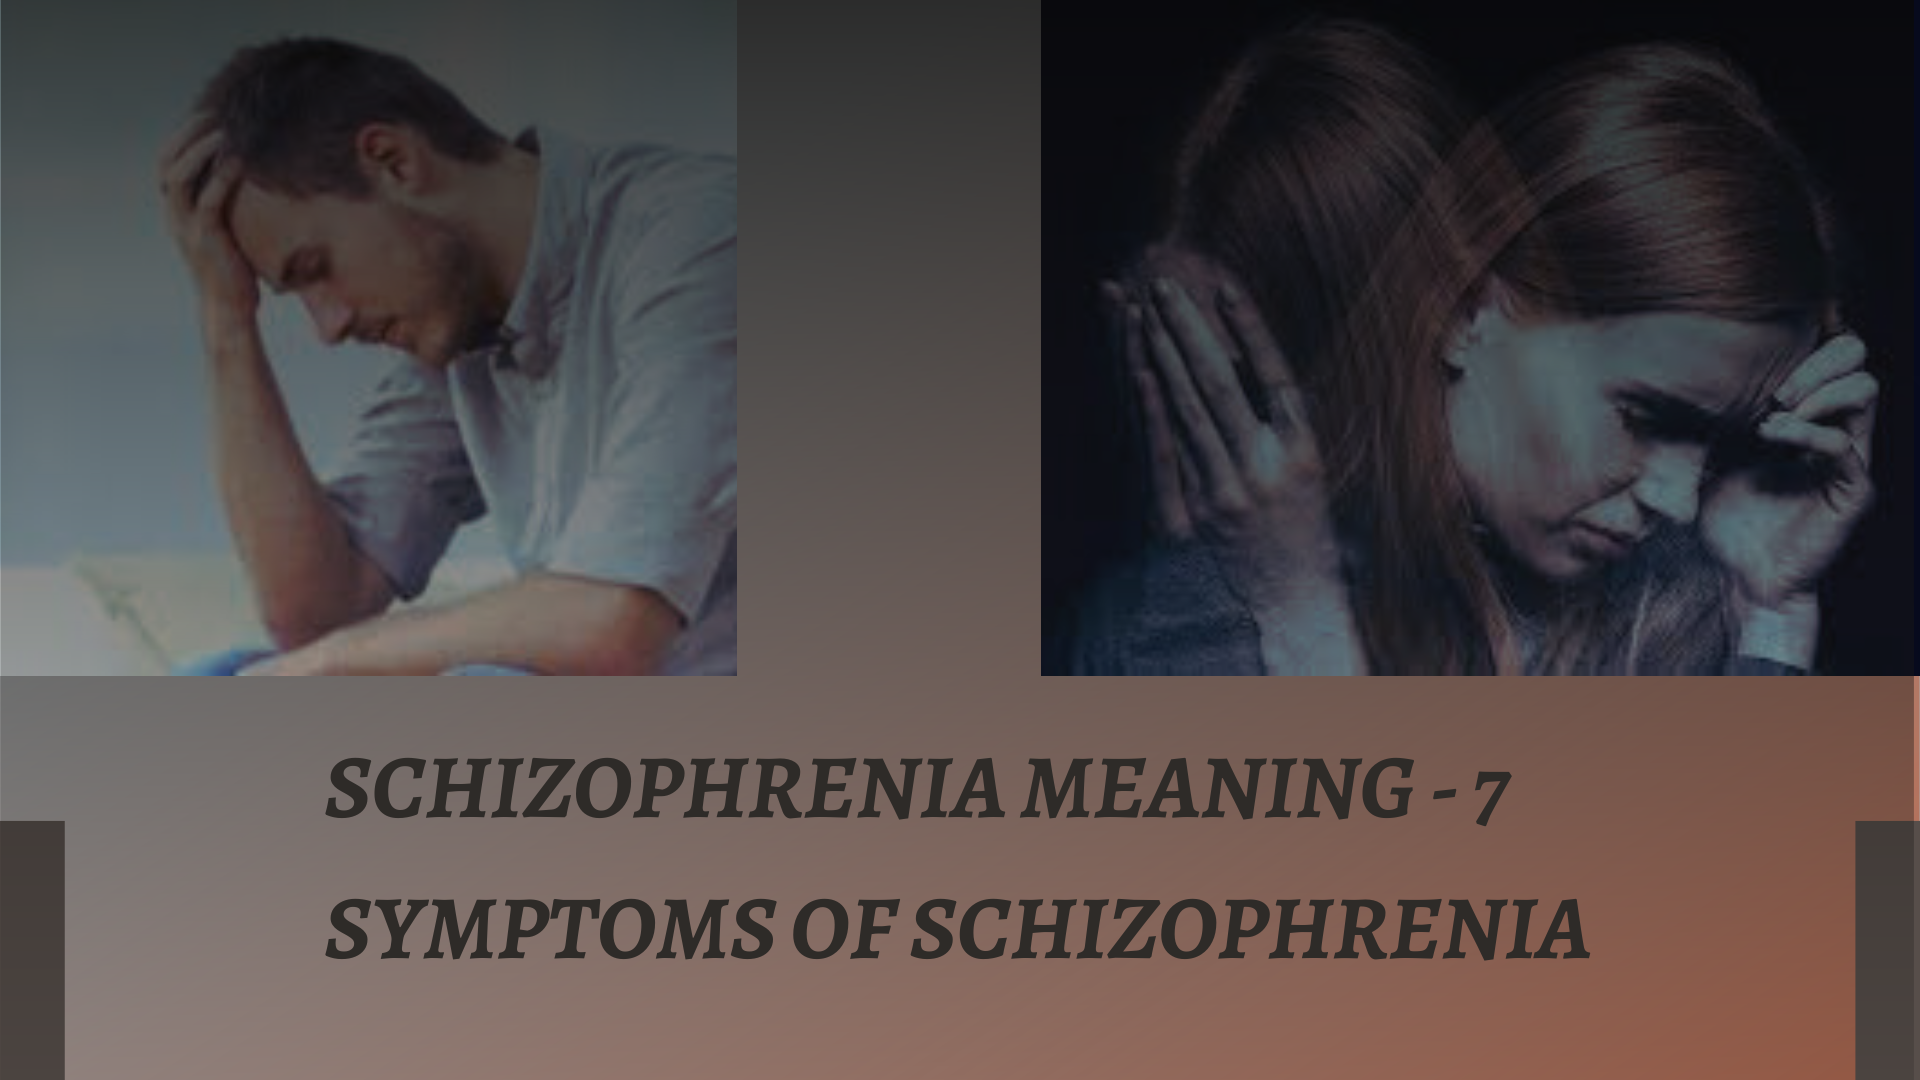 Schizophrenia meaning - 7 Symptoms of schizophrenia